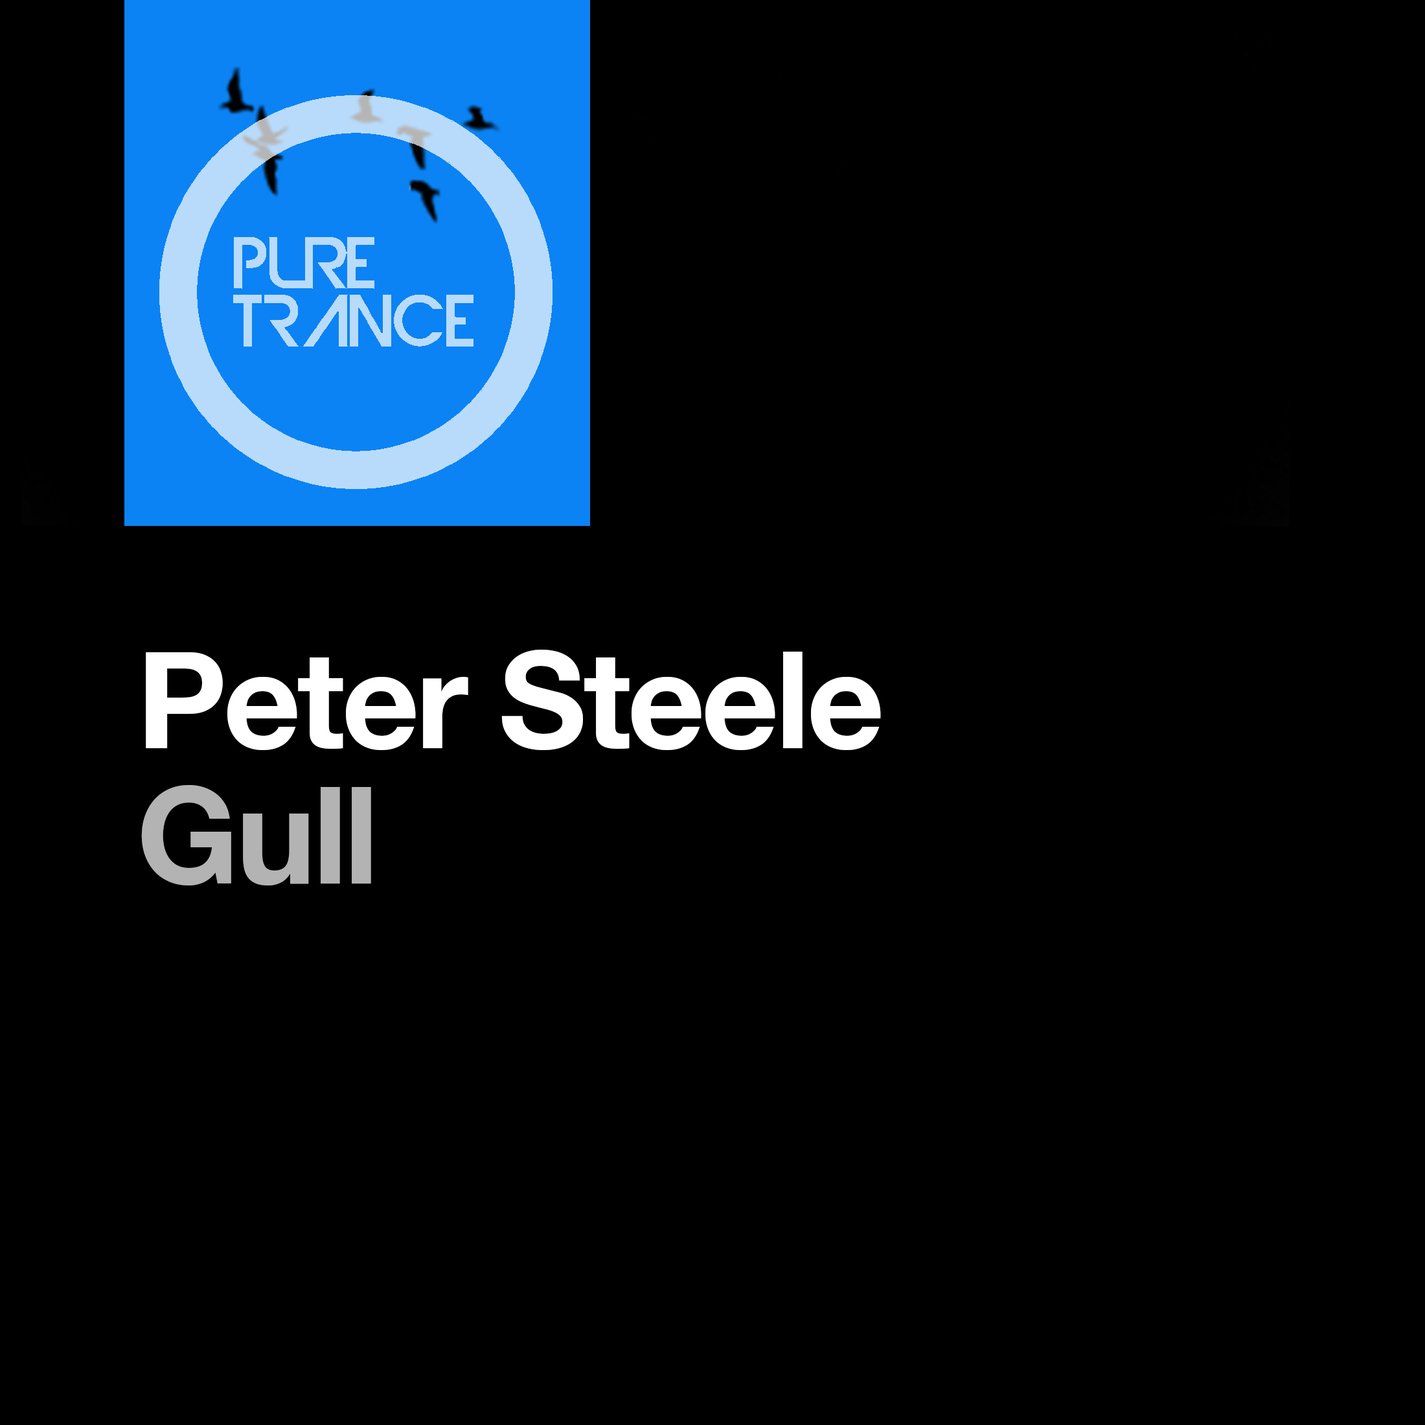 Peter Steele - Gull